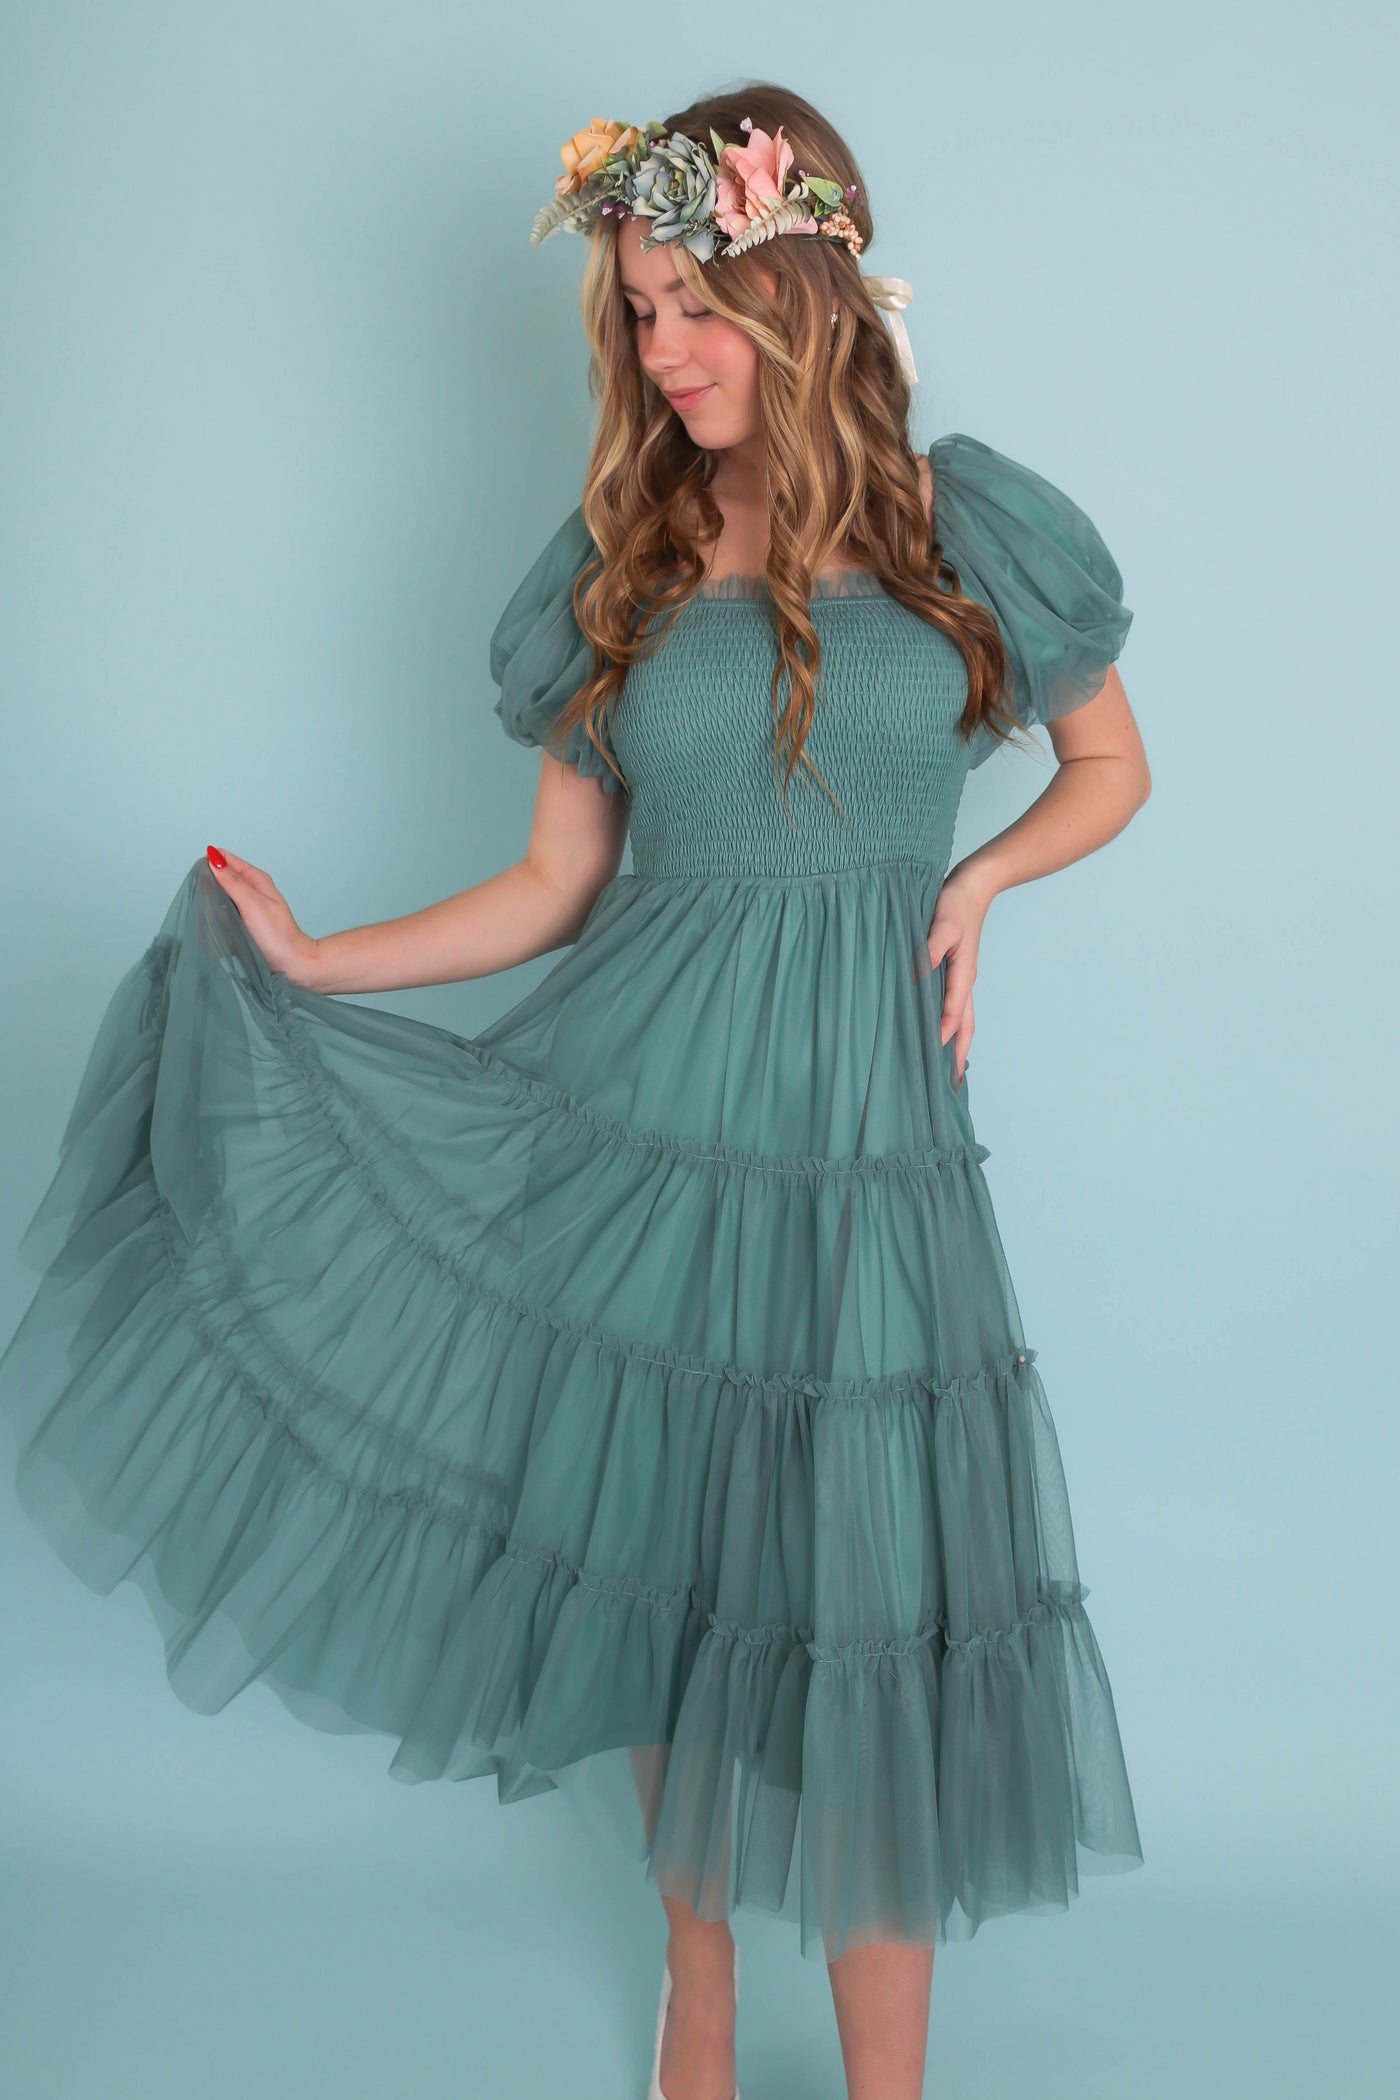 Women's Pretty Teal Tulle Dress- Women's Tulle Long Dress- Tulle Long Photoshoot Dress